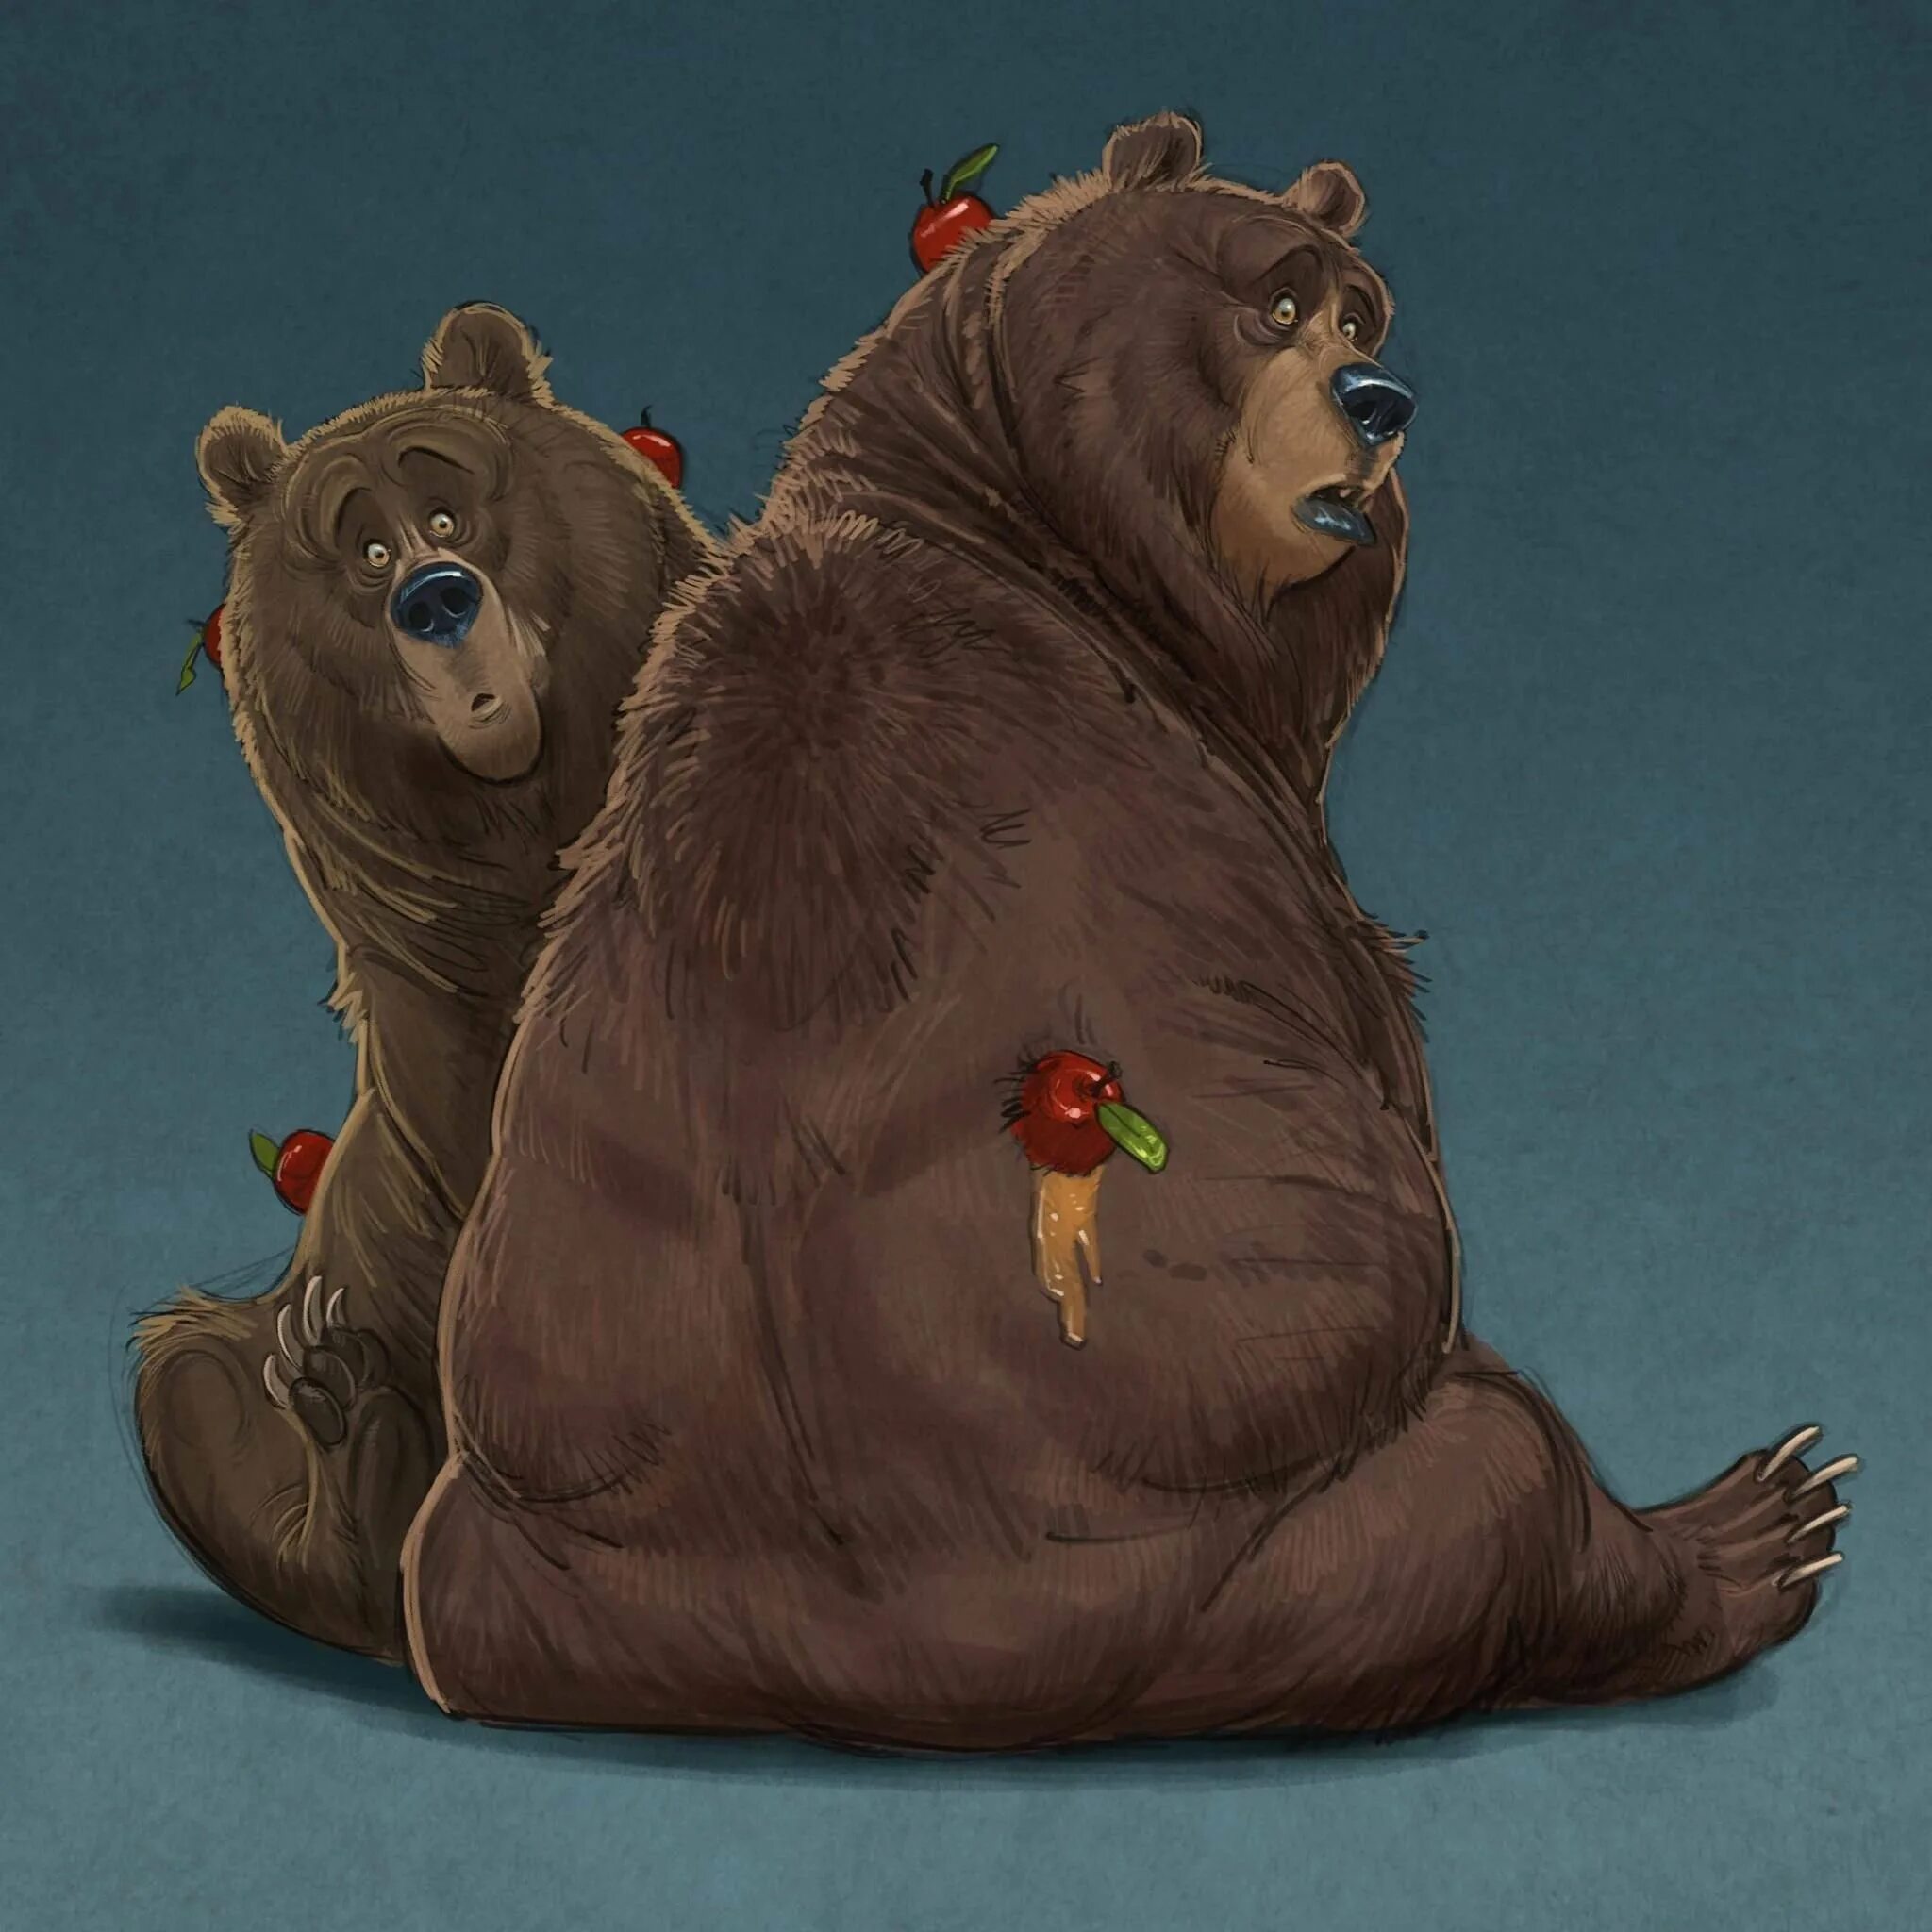 Aaron Blaise медведь. Медведь арты. Толстый медведь. Медвежонок арт.